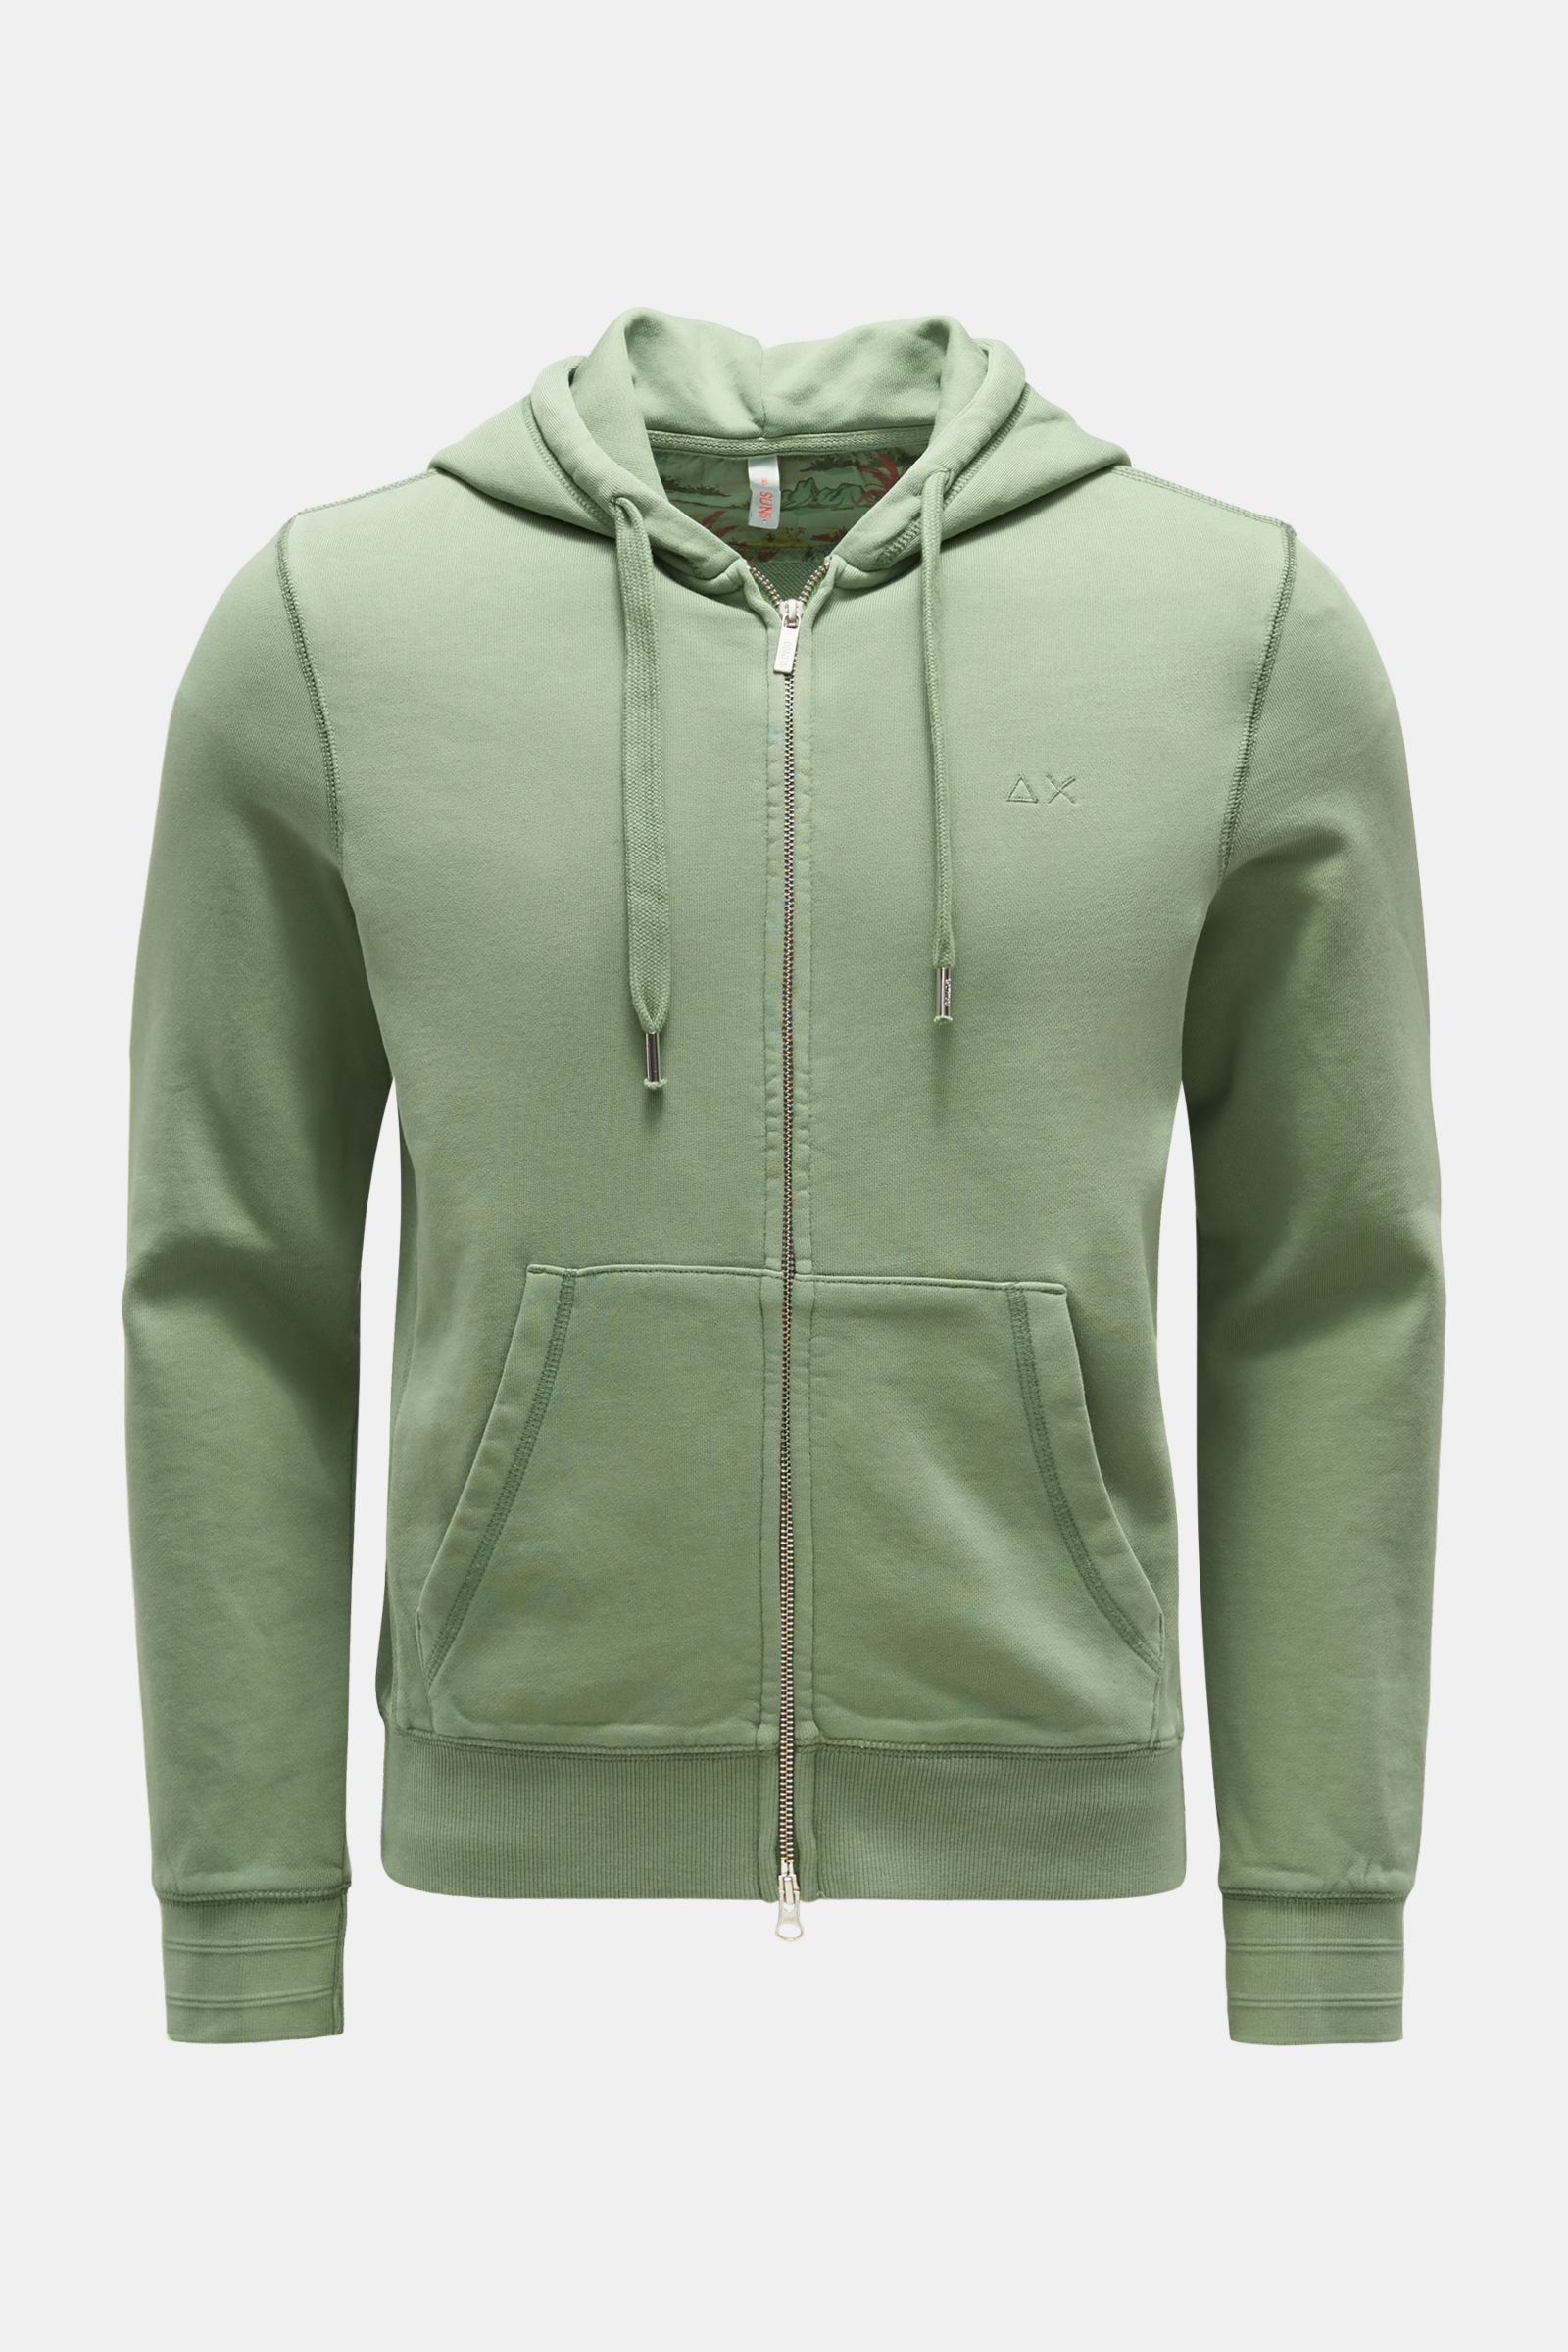 Sweat jacket green